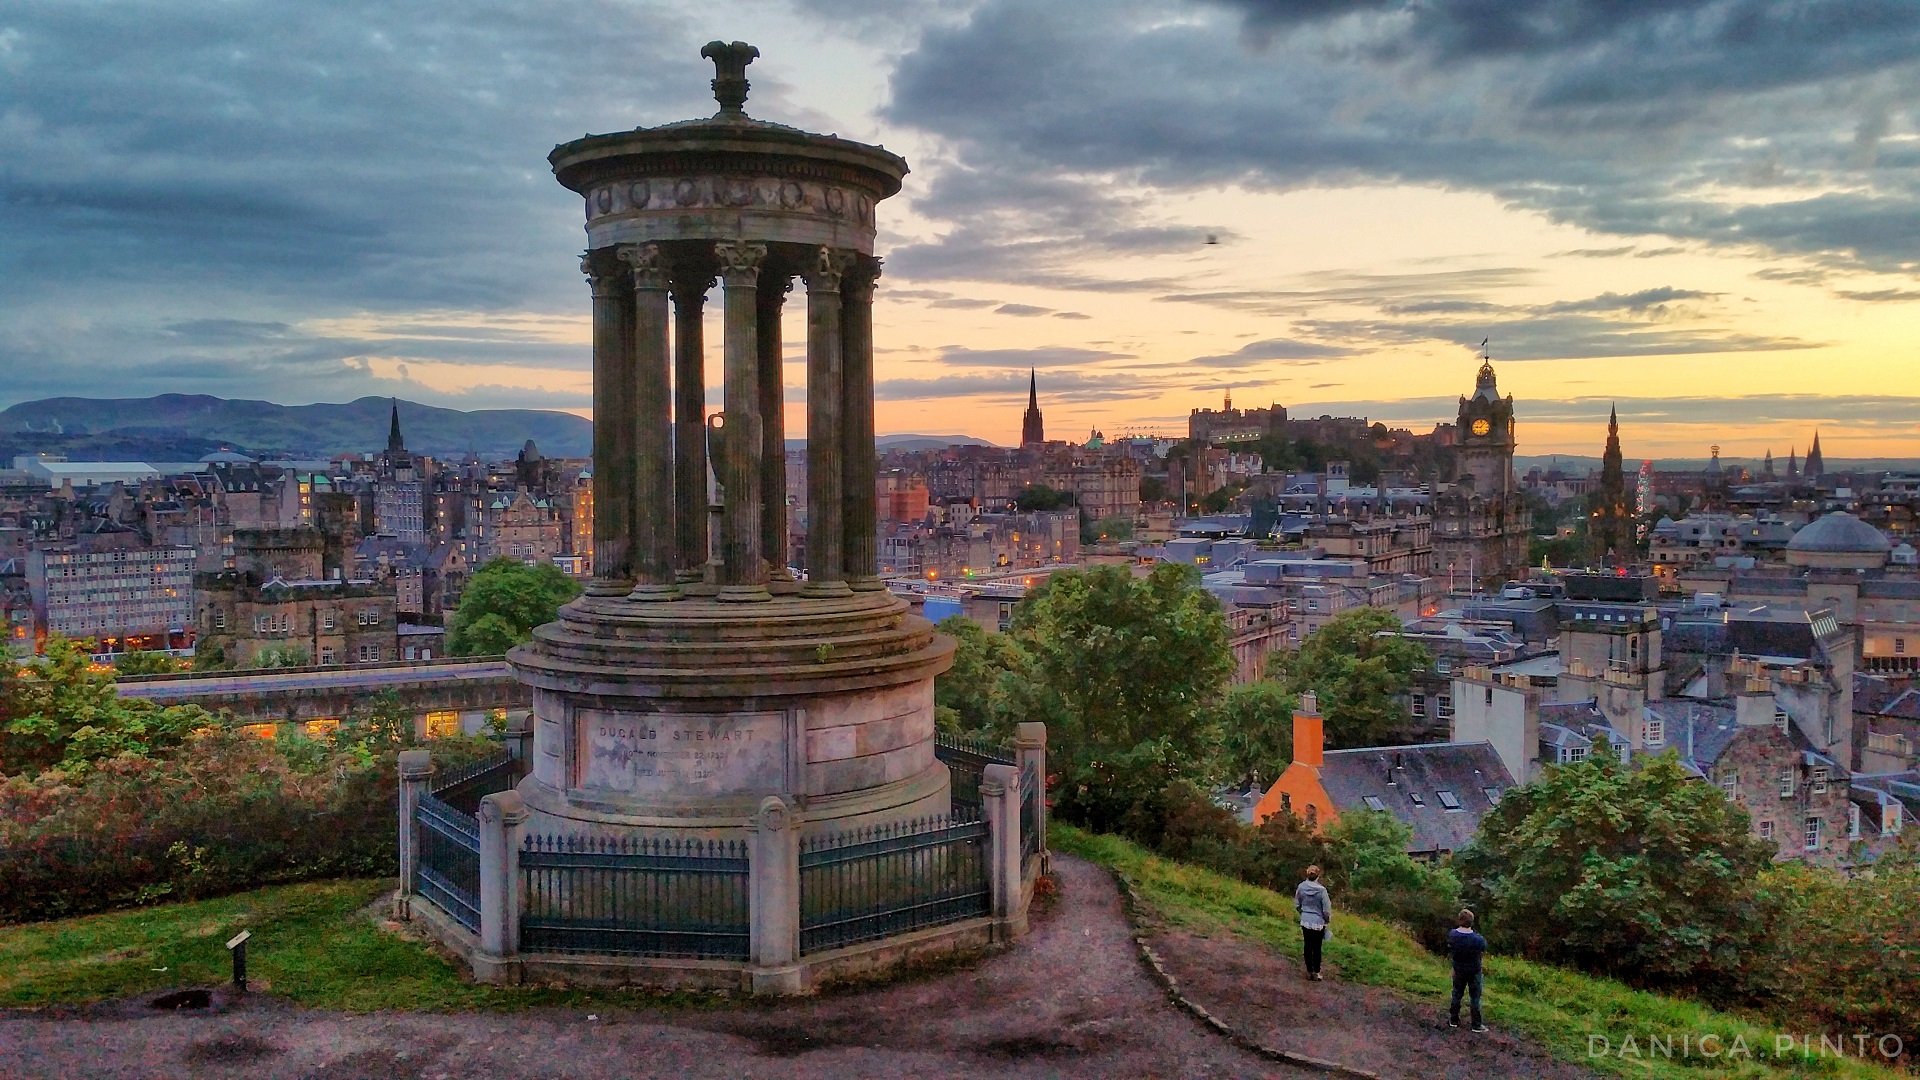 View of Edinburgh from Calton Hill. photo (c) Danica.Pinto on Instagram